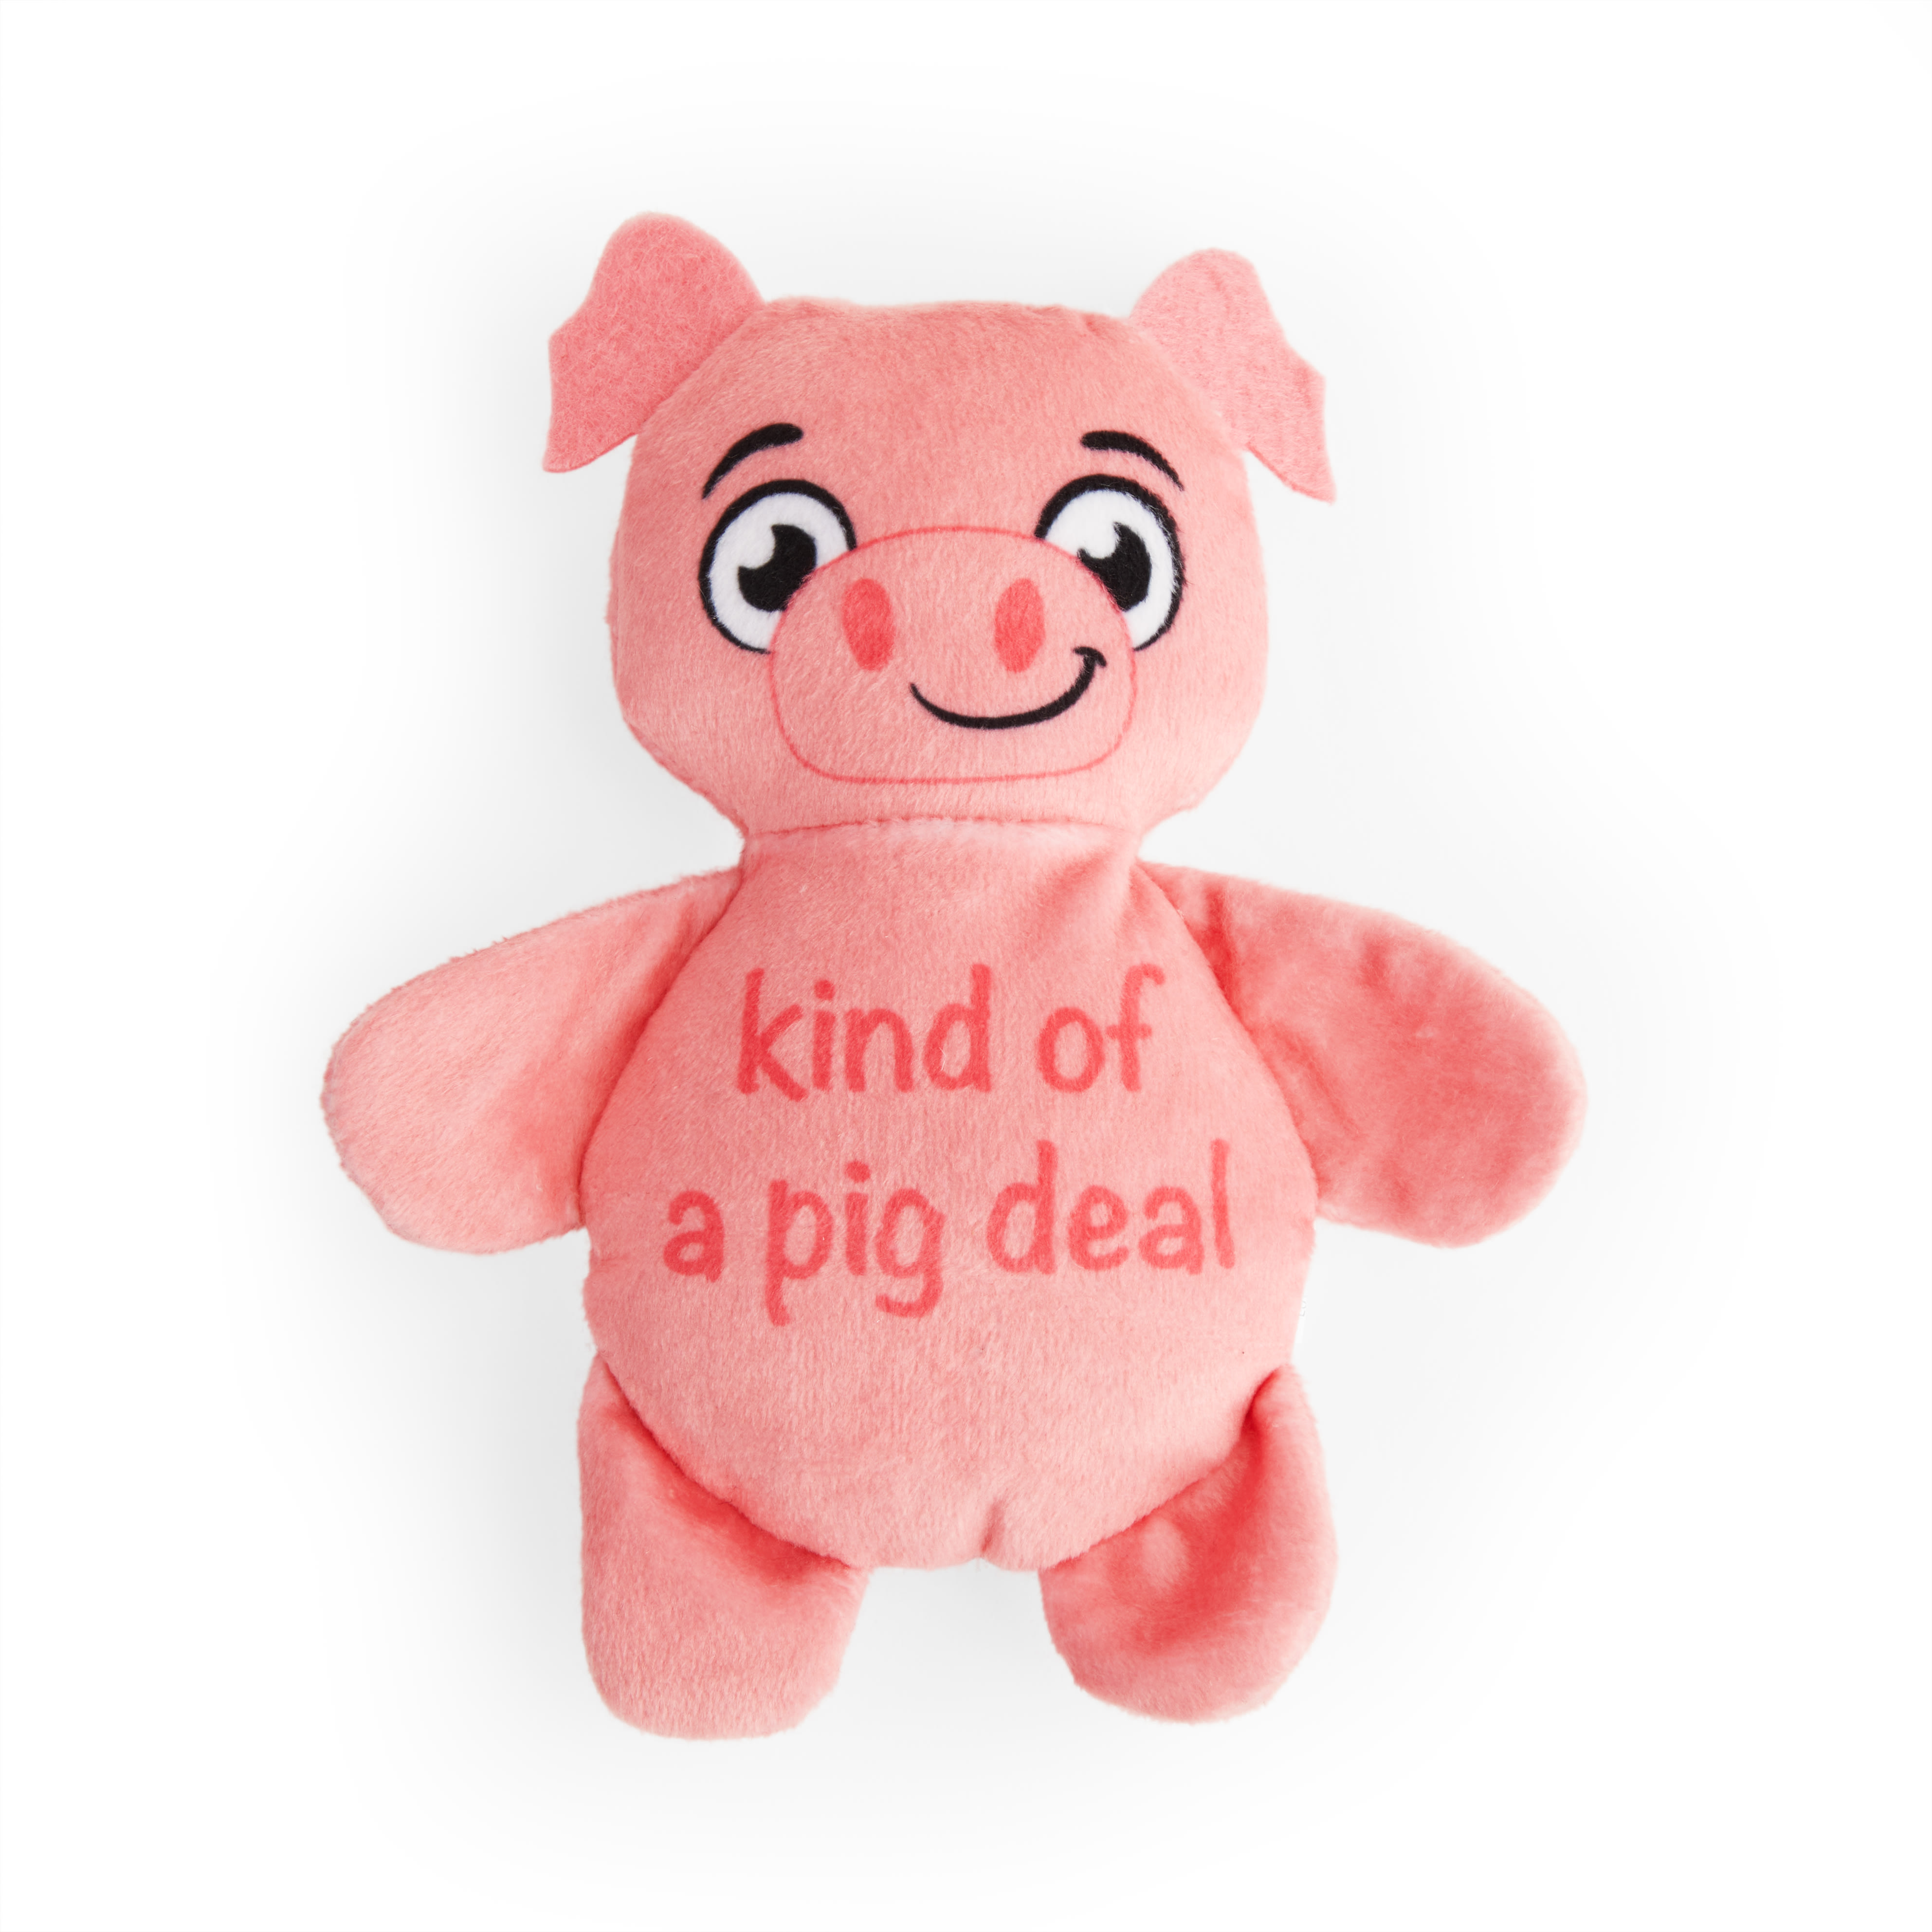 Petco Plush Pig Dog Toy Small